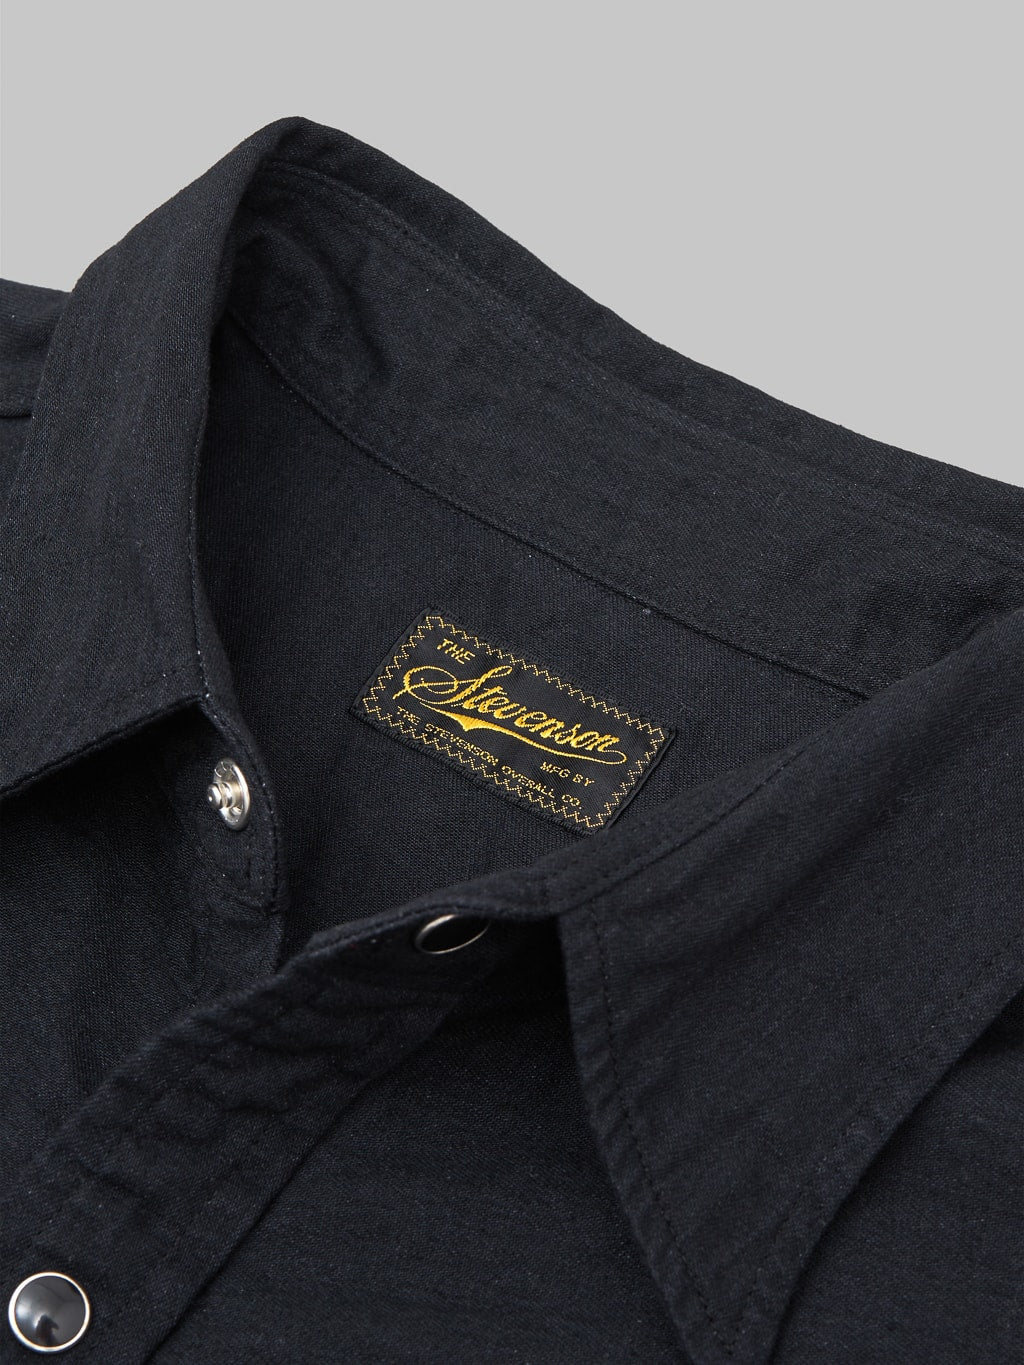 Stevenson Overall Cody Shirt black denim label interior